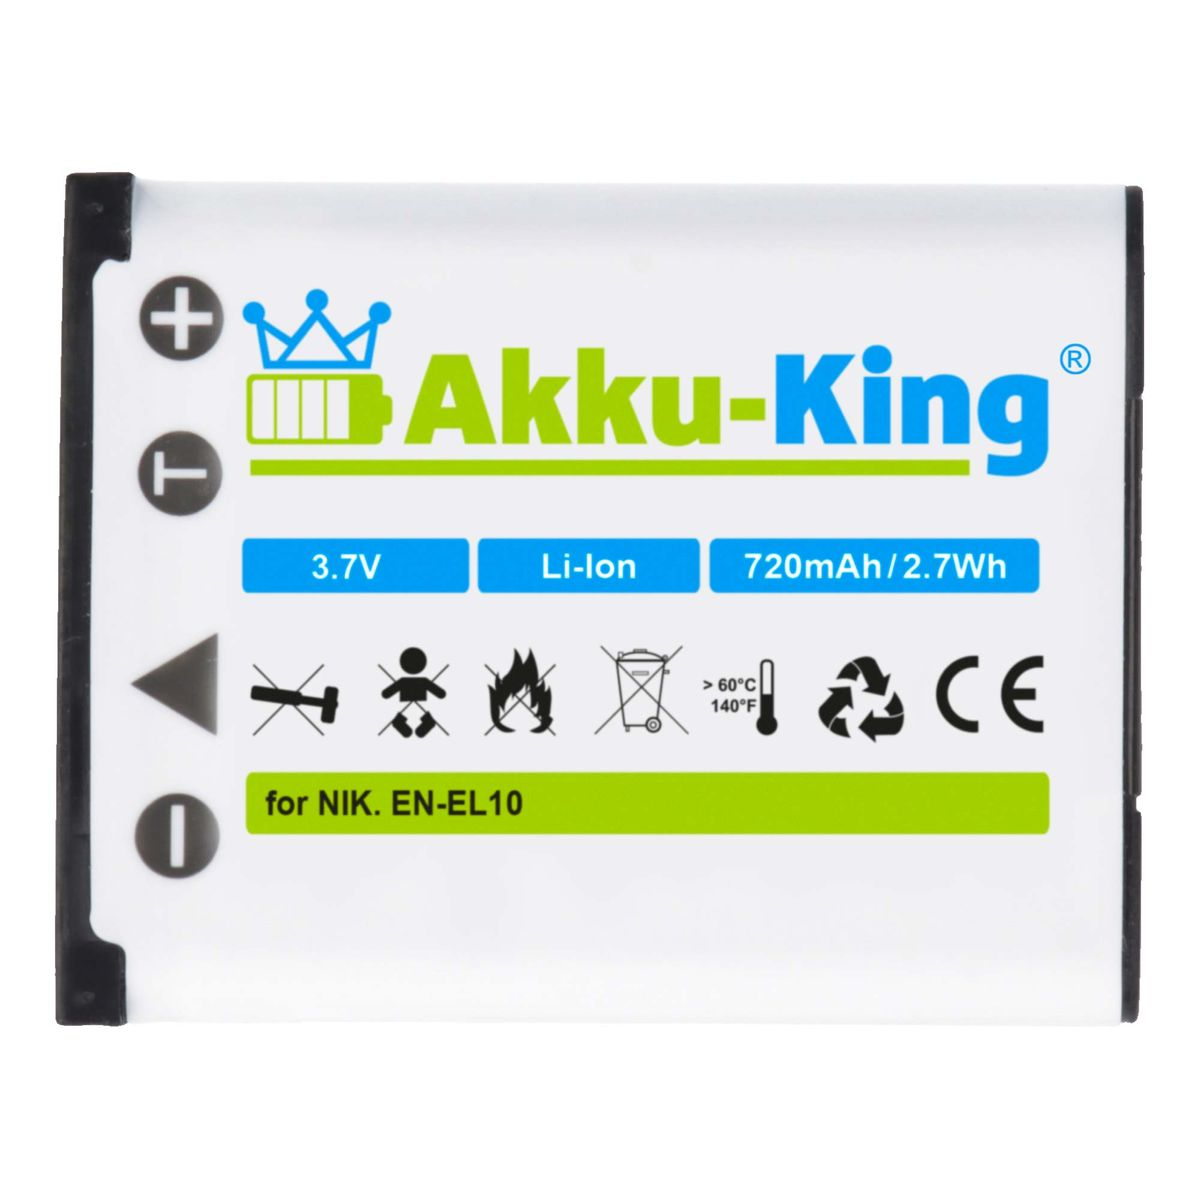 Akku 3.7 EN-EL10 Li-Ion 720mAh mit Volt, AKKU-KING Nikon kompatibel Kamera-Akku,